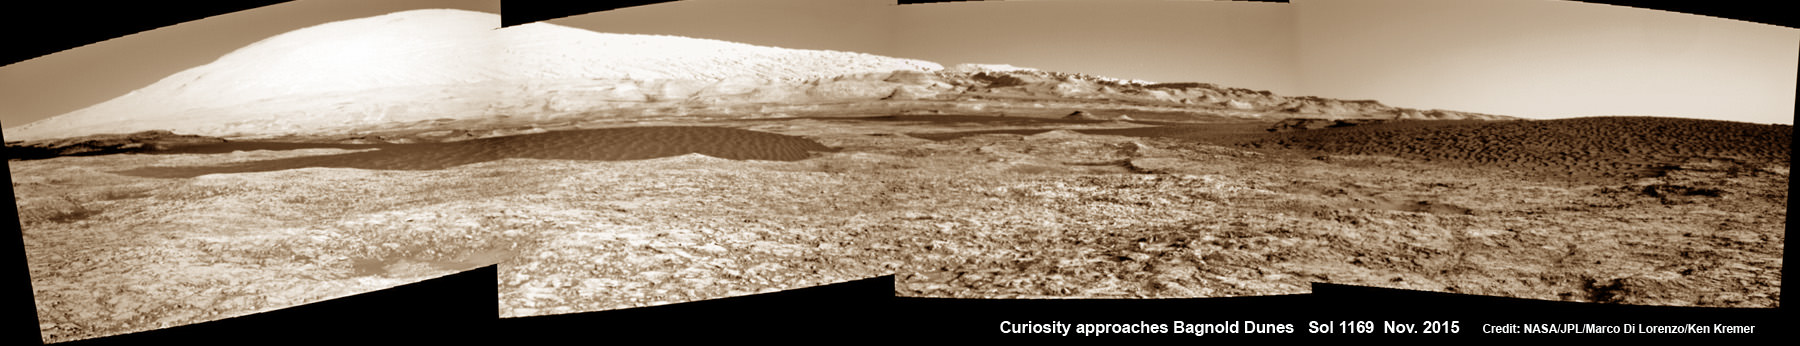 Curiosity-Sol-1169_2b_Ken-Kremer.jpg